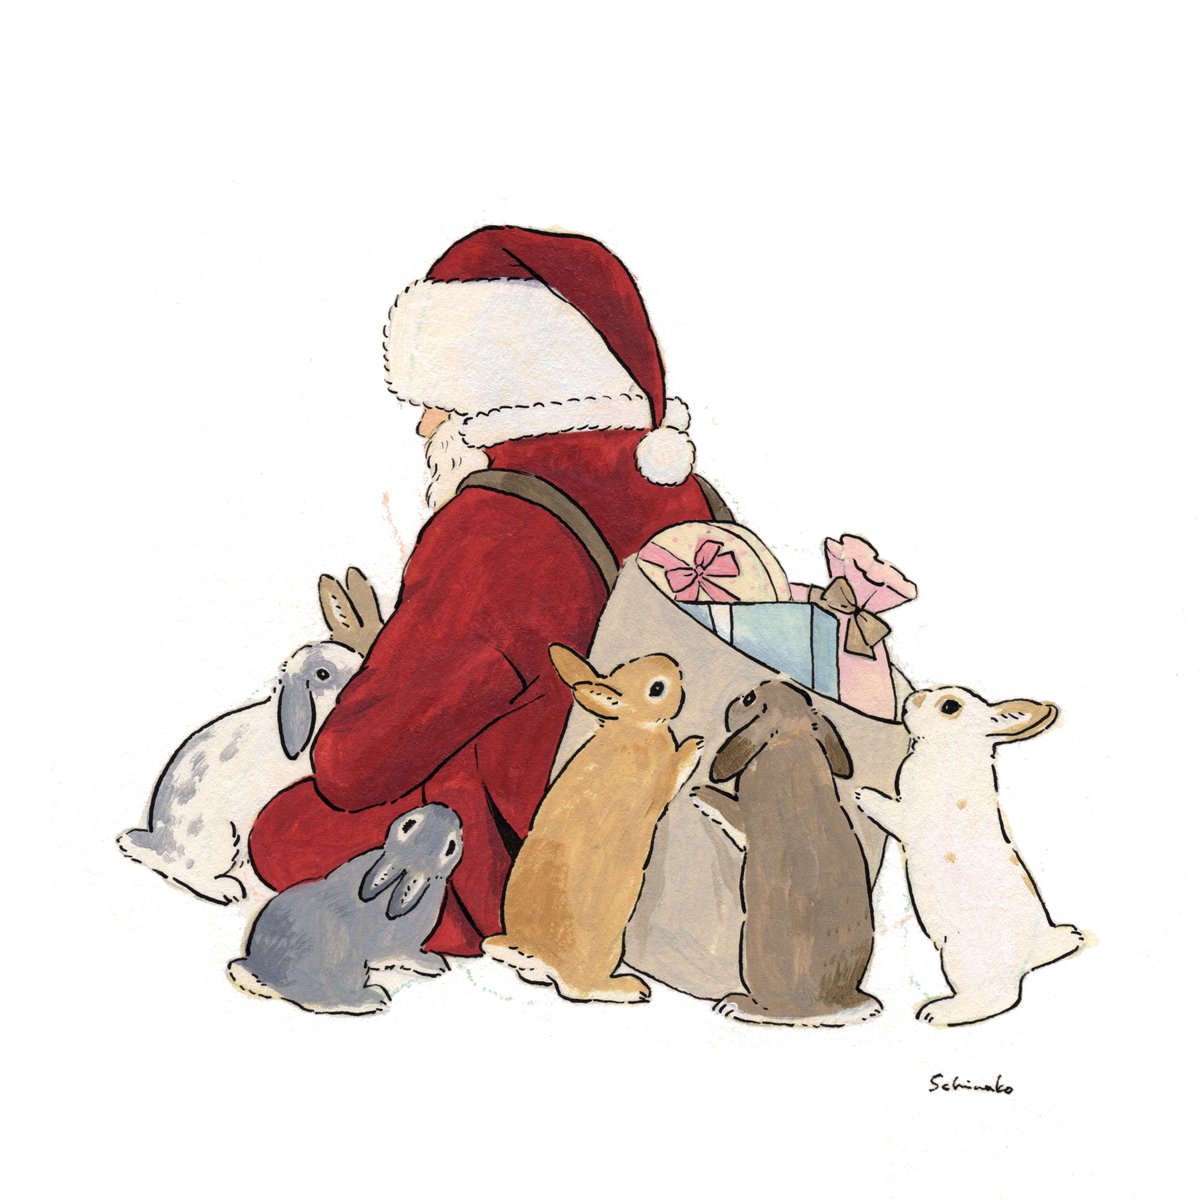 santa claus red pants rabbit hat santa hat box gift white background  illustration images